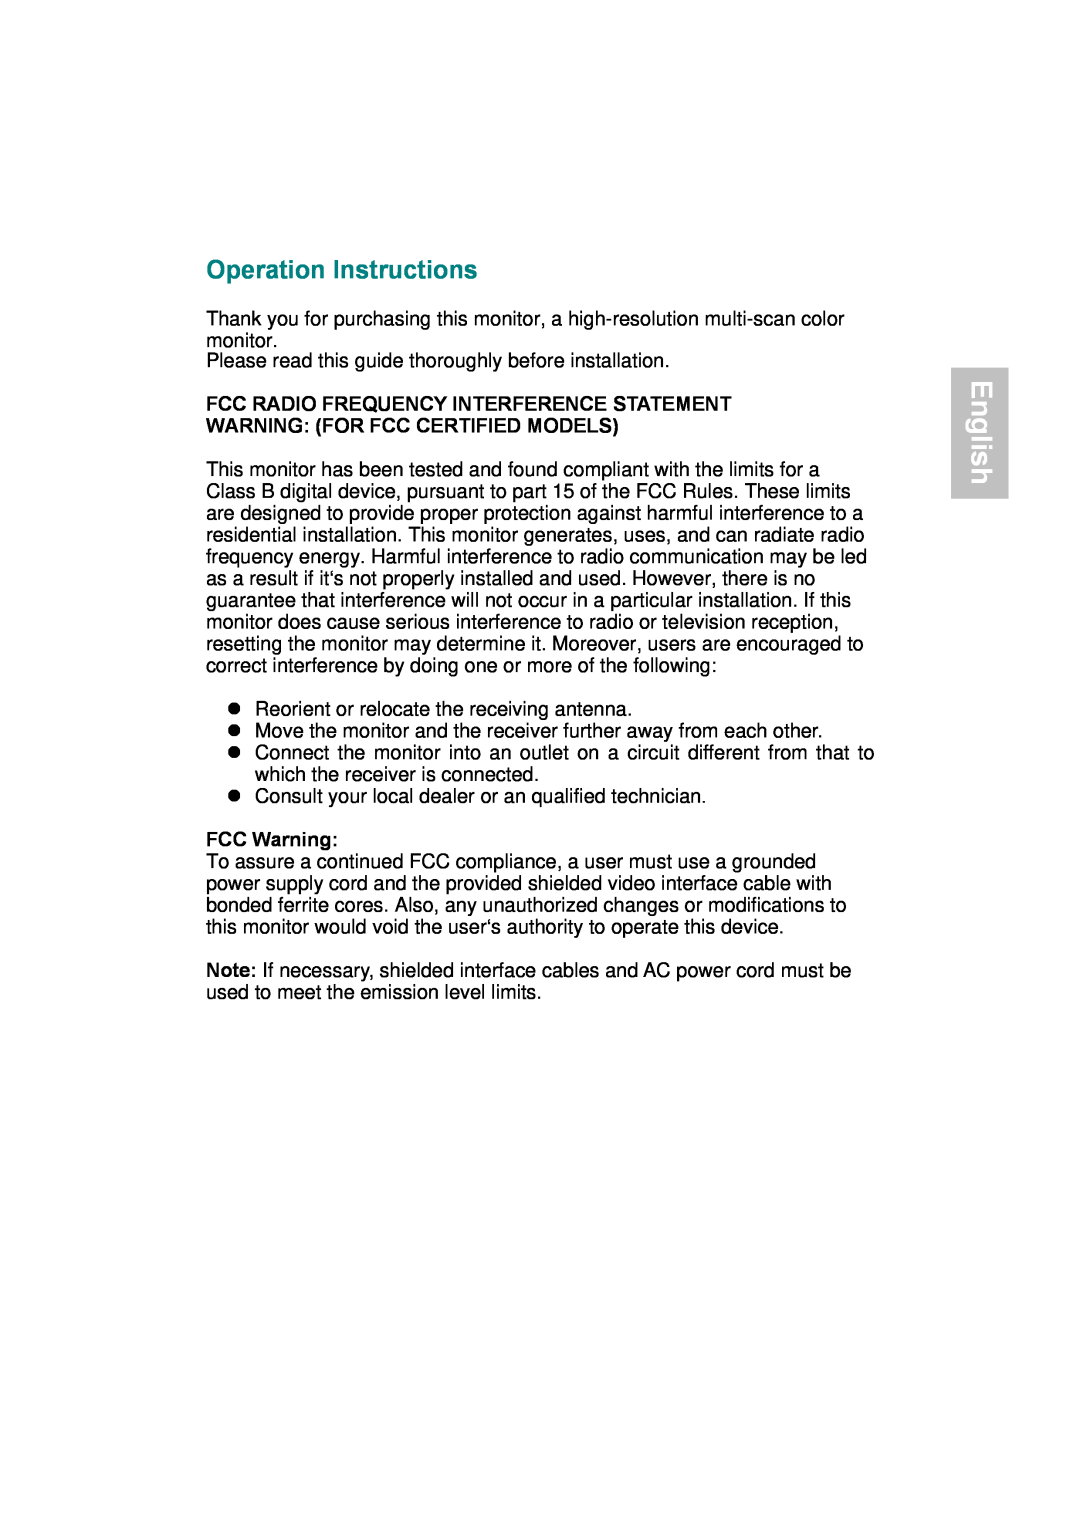 AOC 177S manual English, Operation Instructions, FCC Warning 